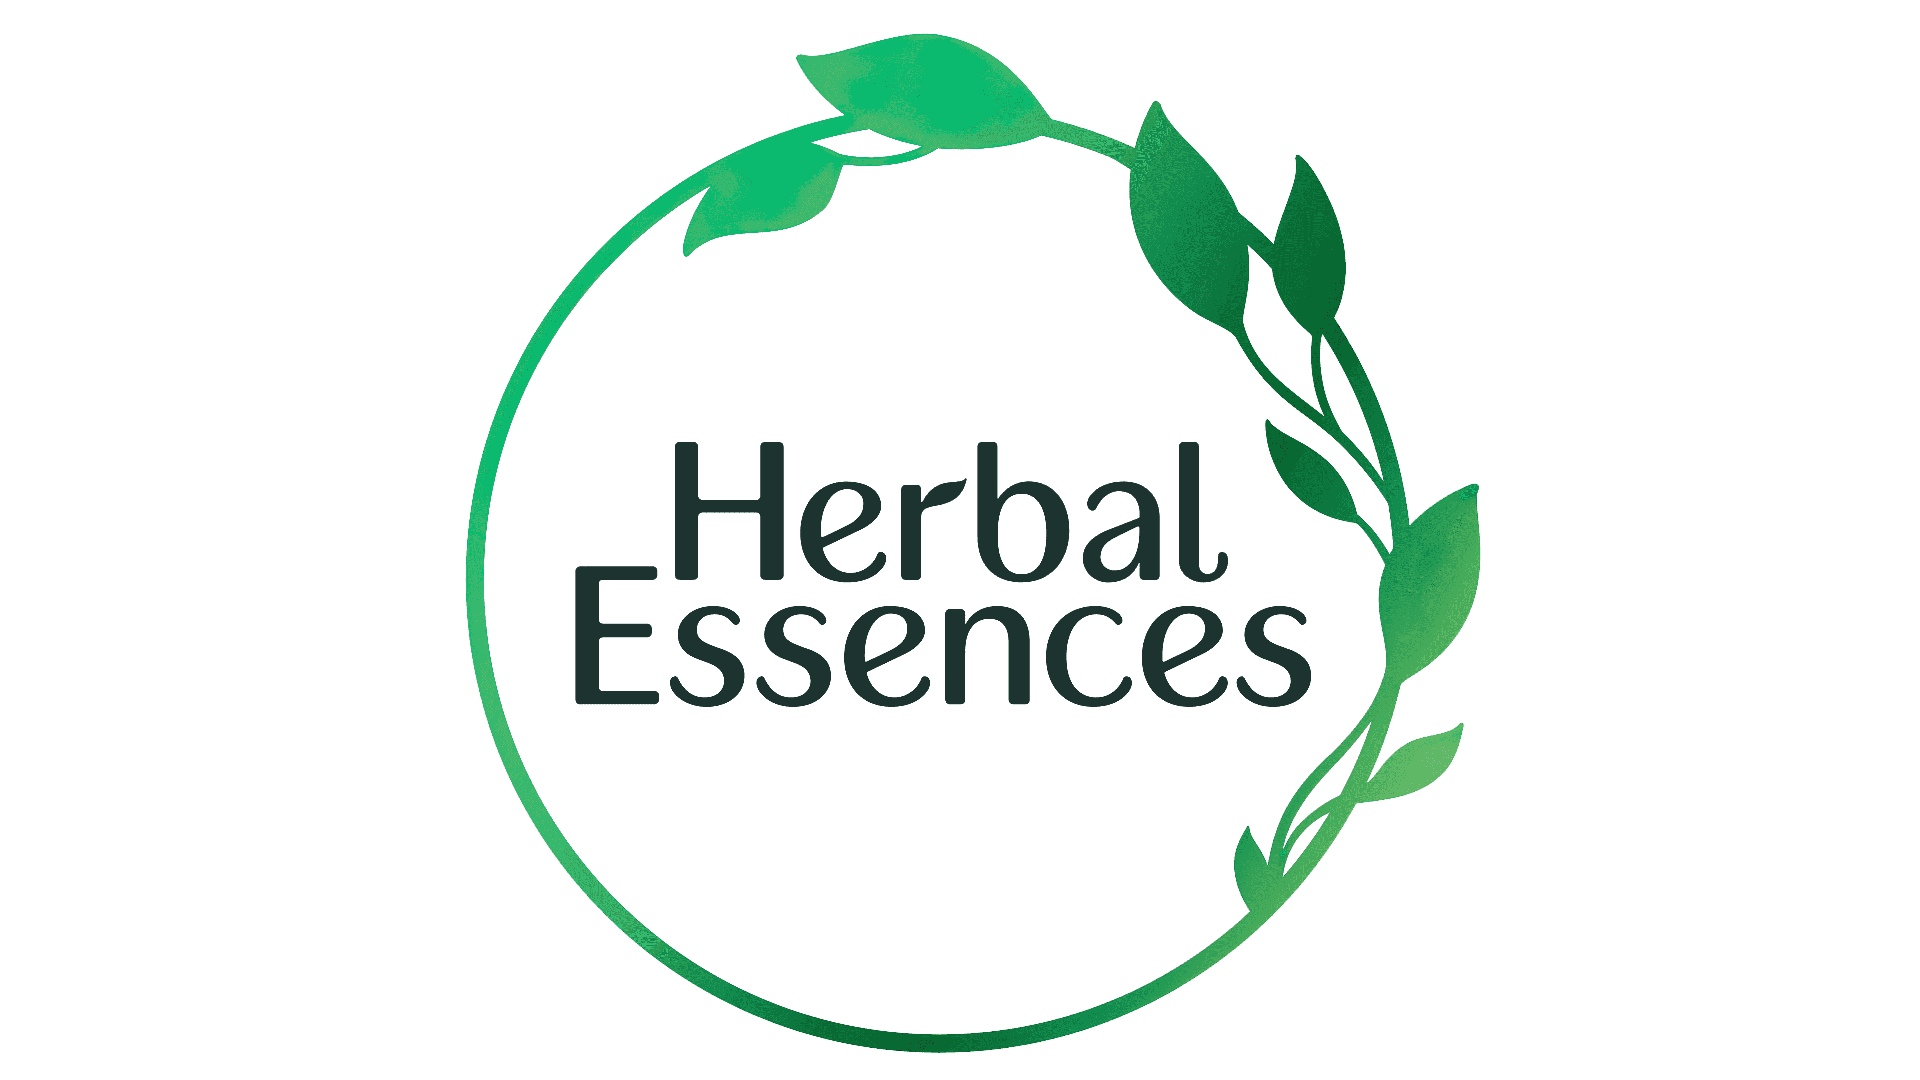 Brand: Herbal Essences